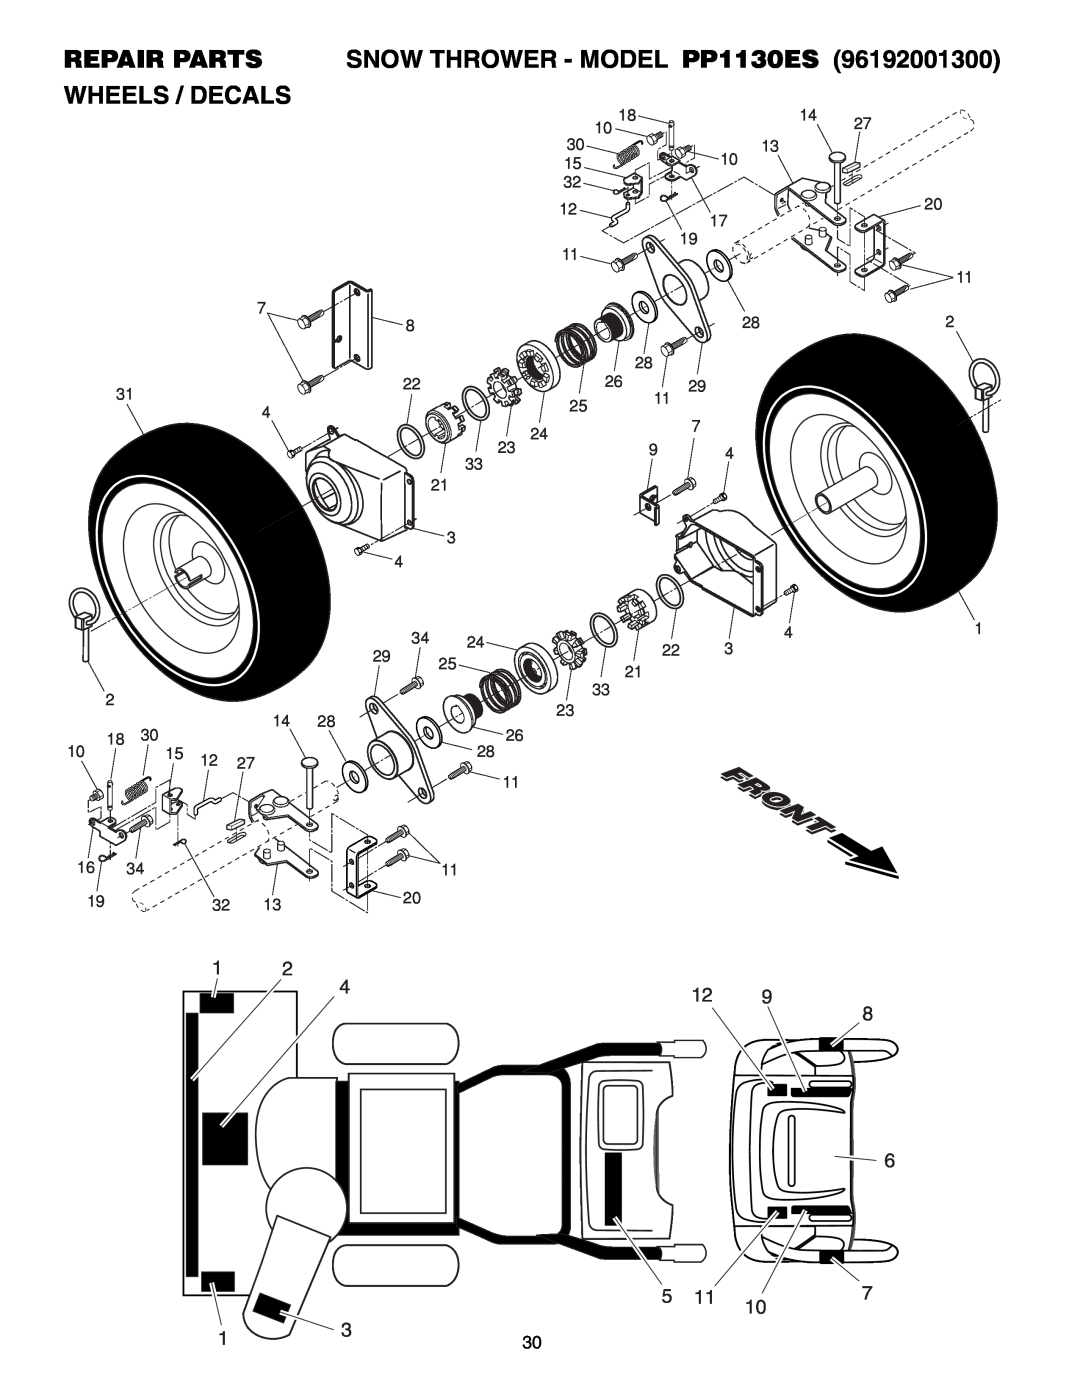 Poulan 96192001300, 406275 owner manual Repair Parts Wheels / Decals, SNOW THROWER - MODEL PP1130ES 